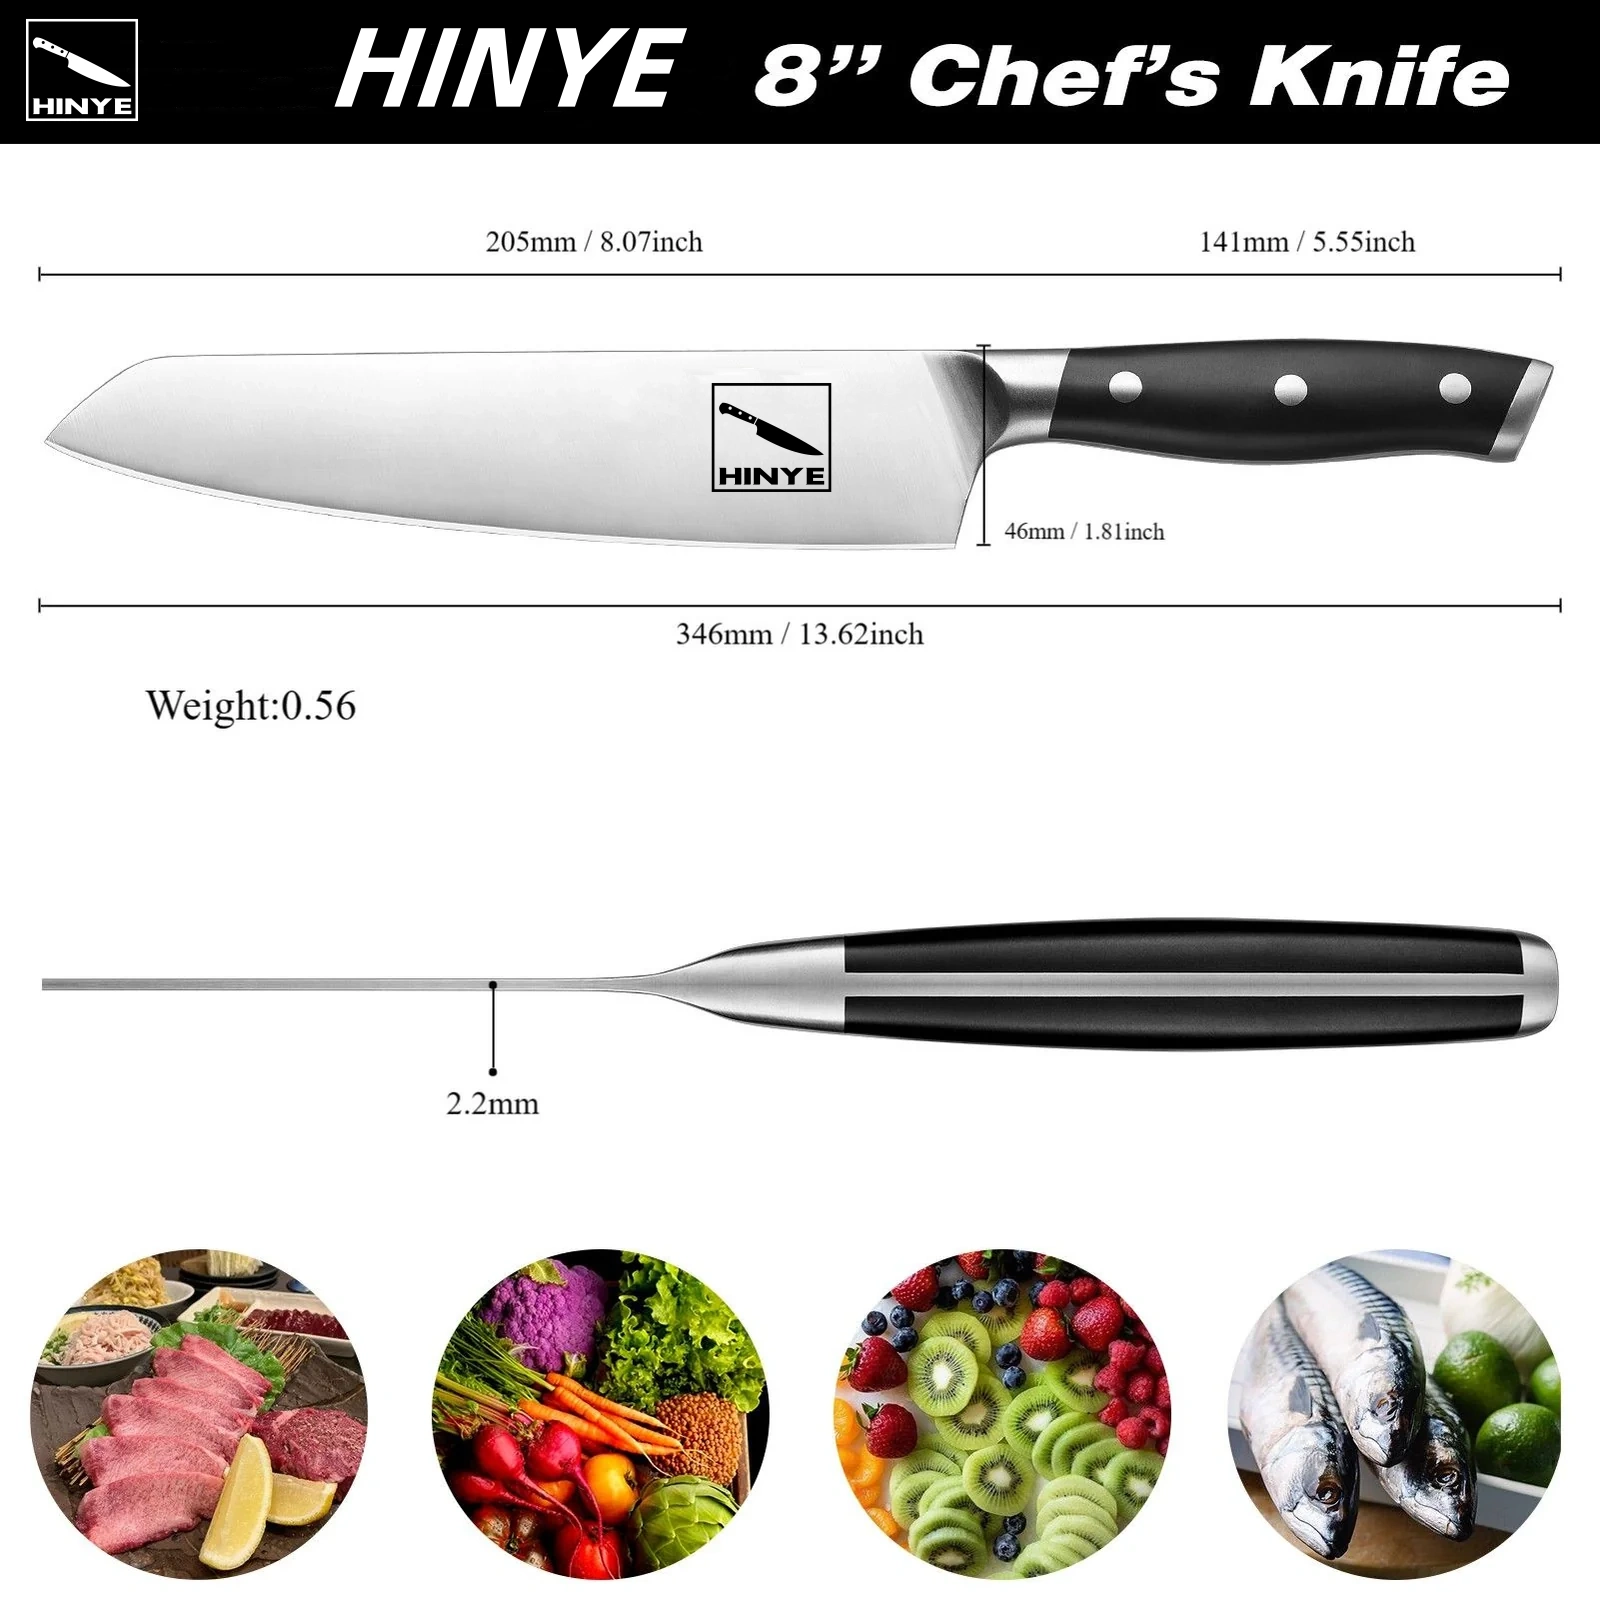 Hinye-Stahl 8" Chef